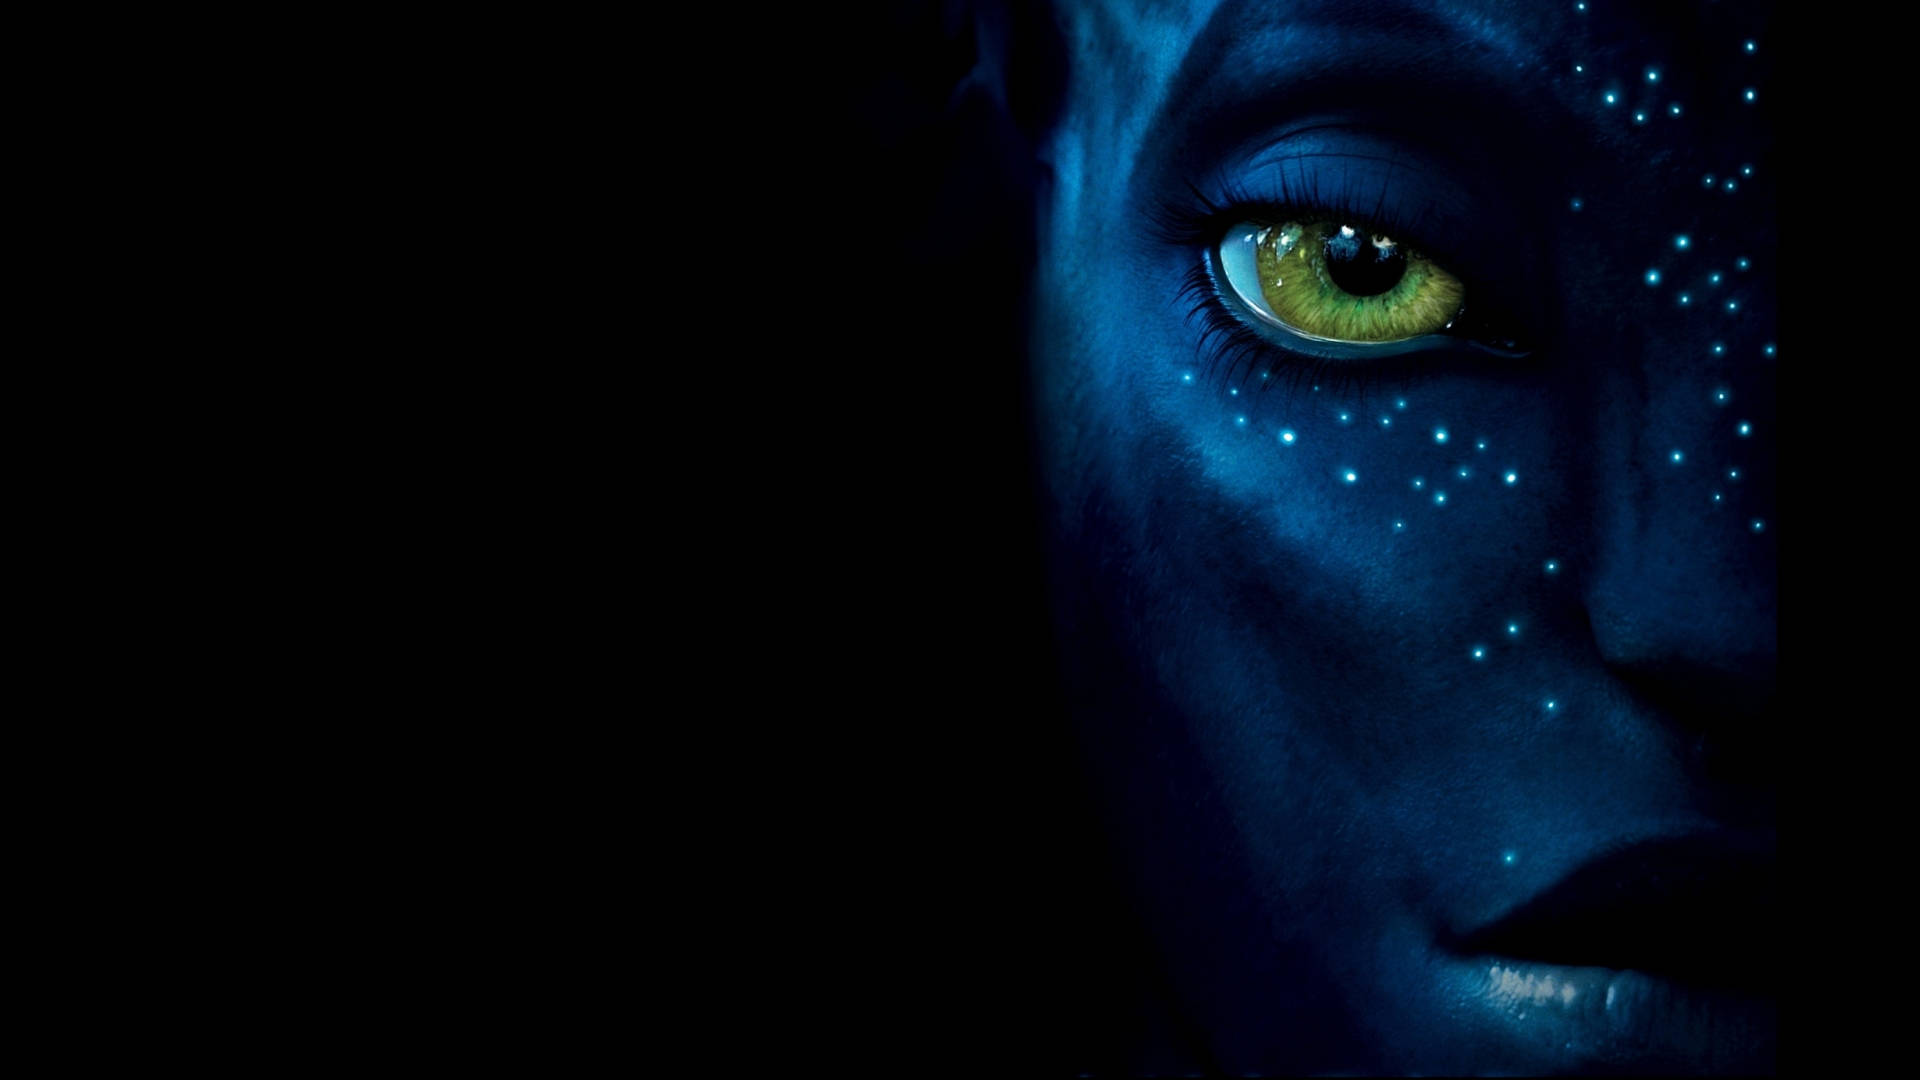 Avatar Na'vi Promotional Poster Background